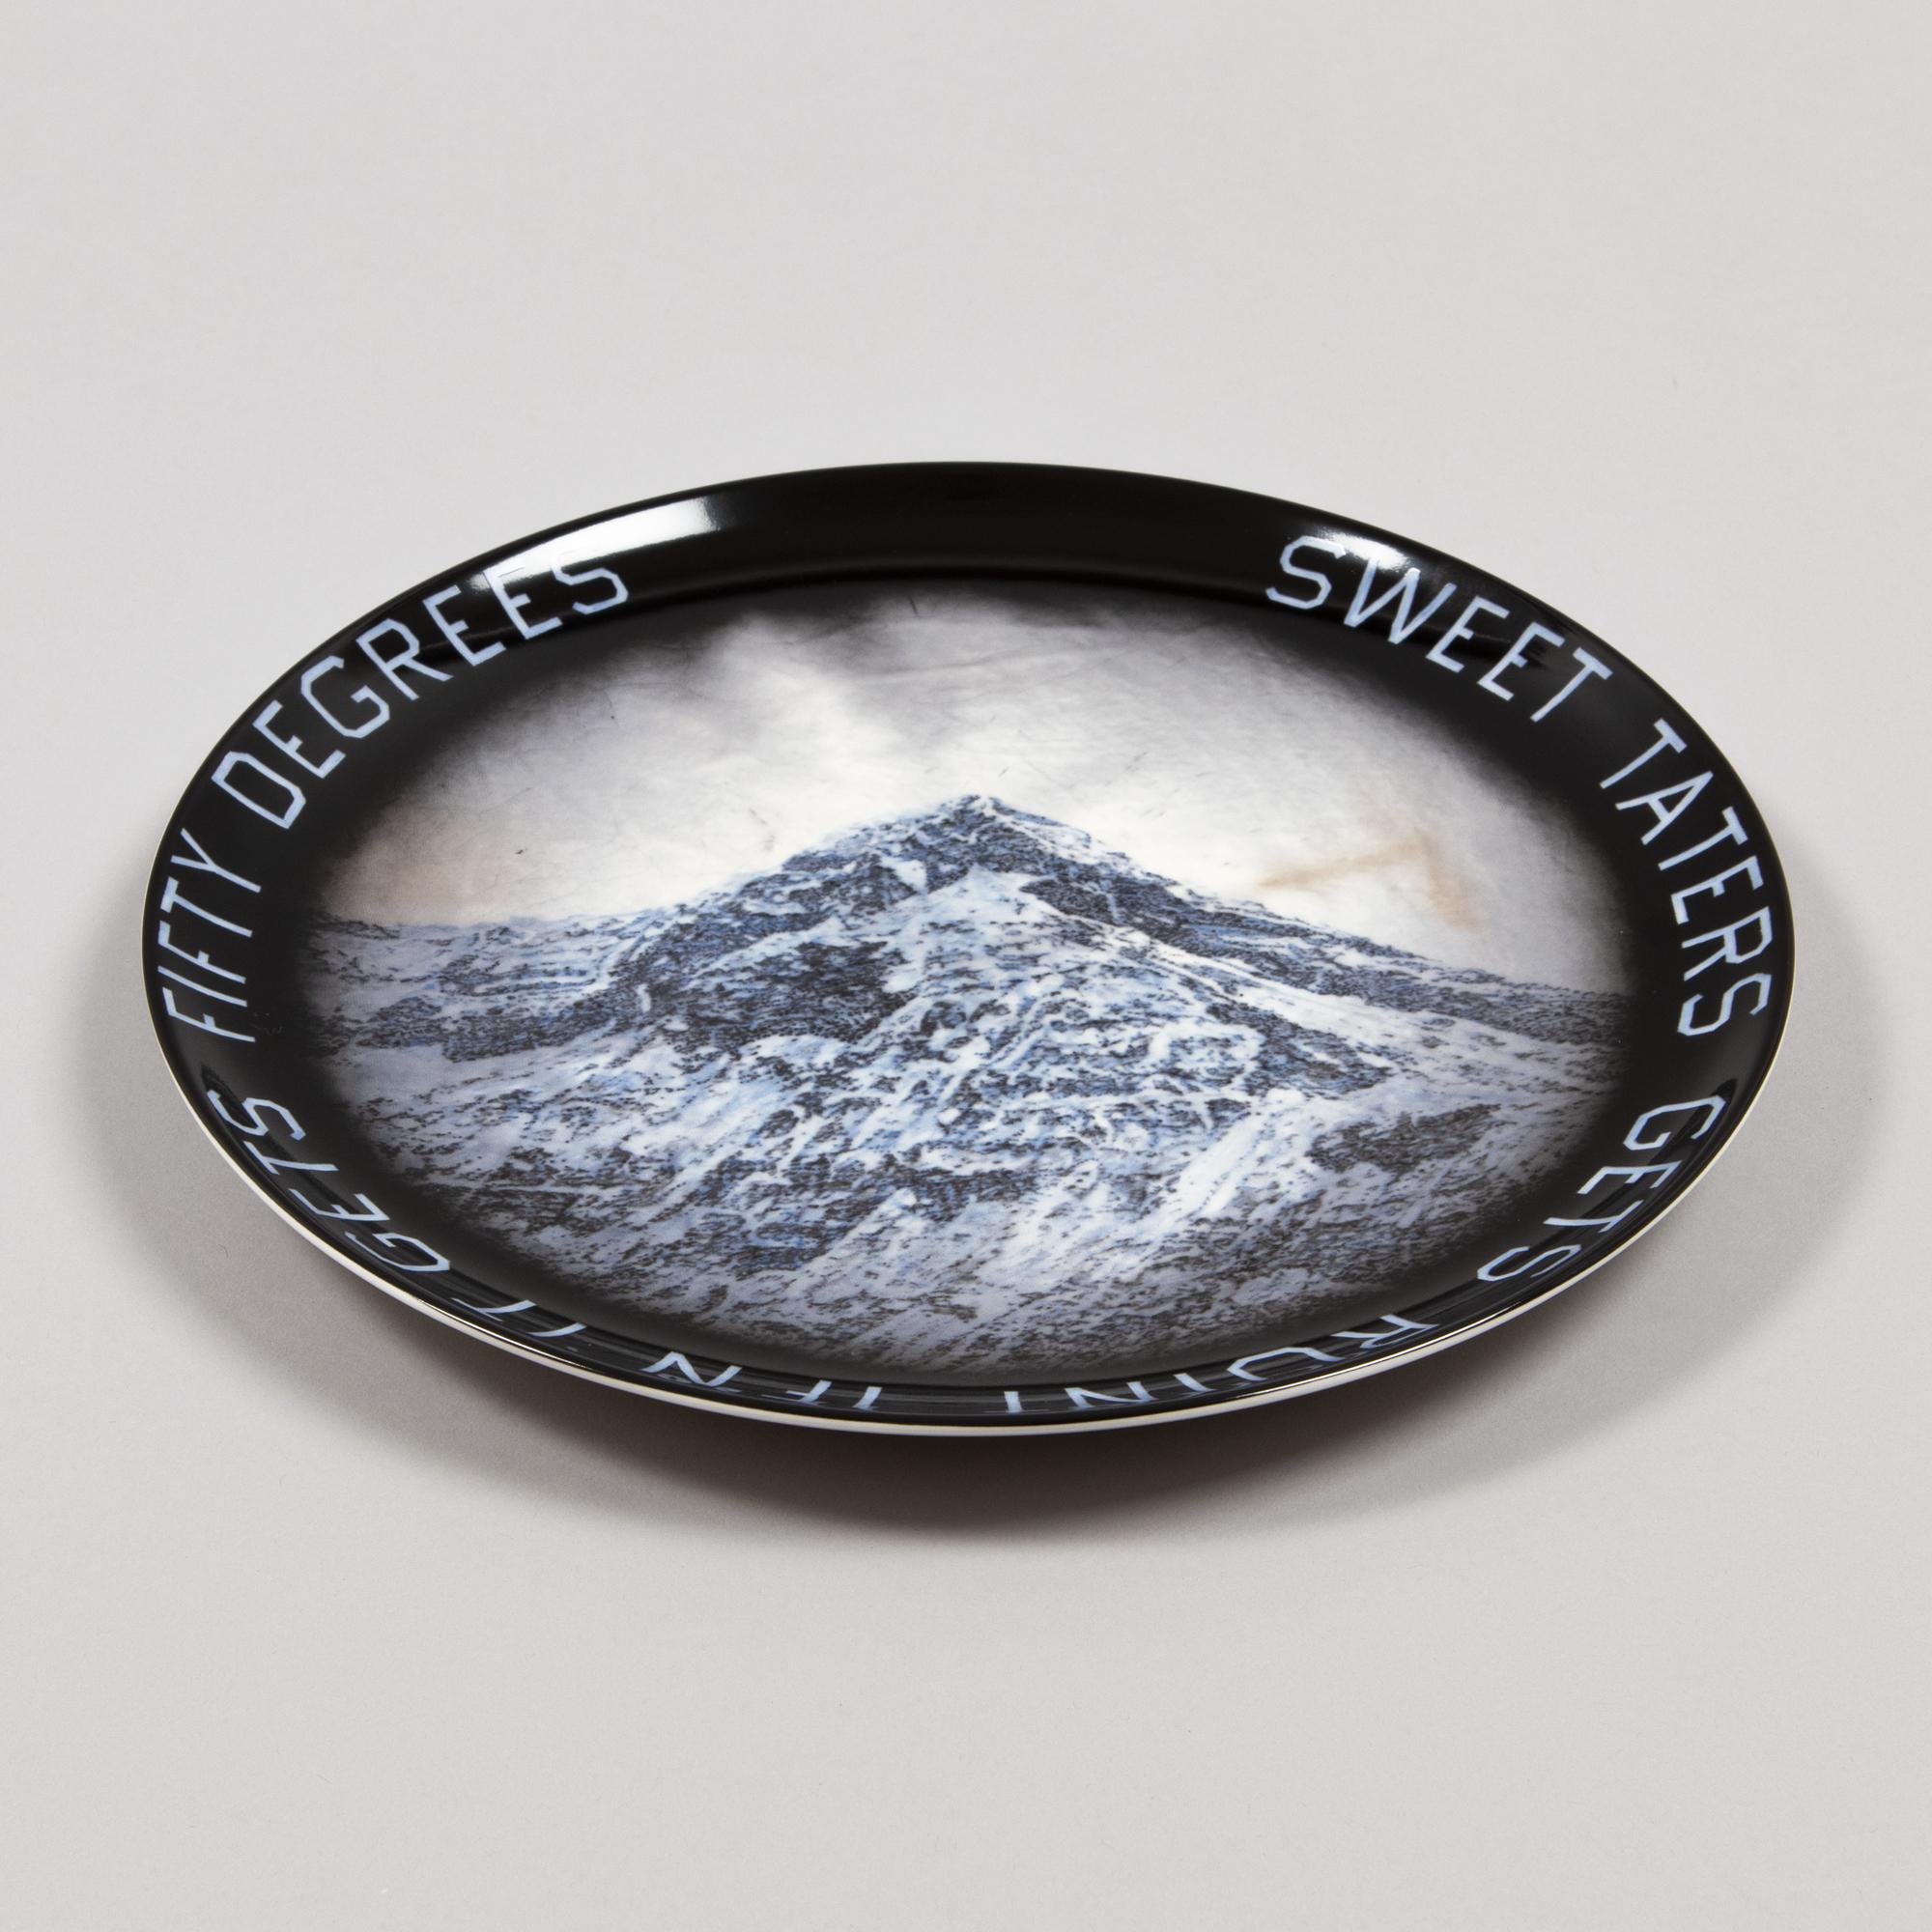 Ed Ruscha, Sweet Taters - Limited Edition Plate, Pop Art, Conceptual Art 2